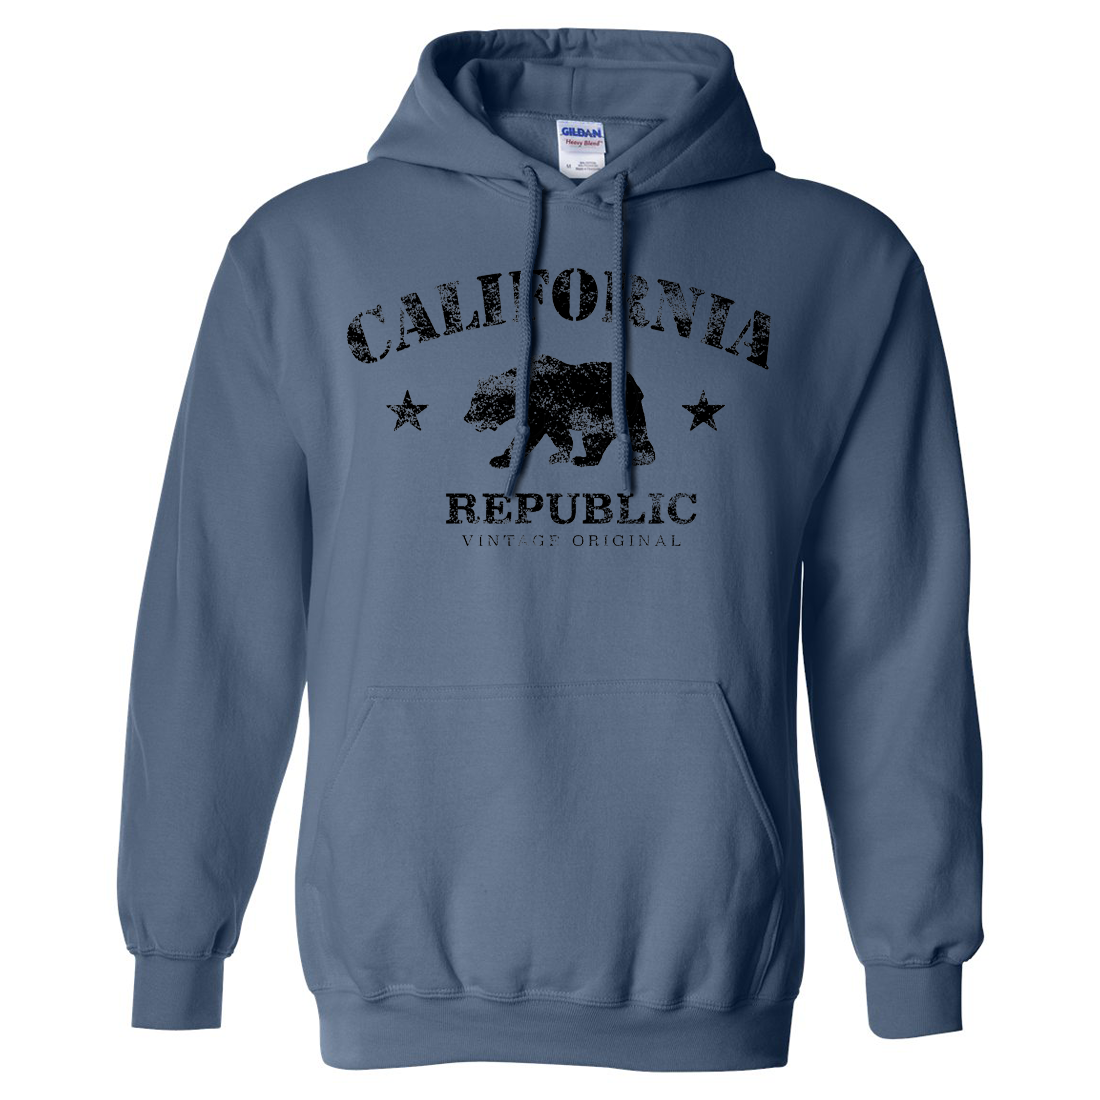 California Republic Vintage Original Sweatshirt Hoodie ...